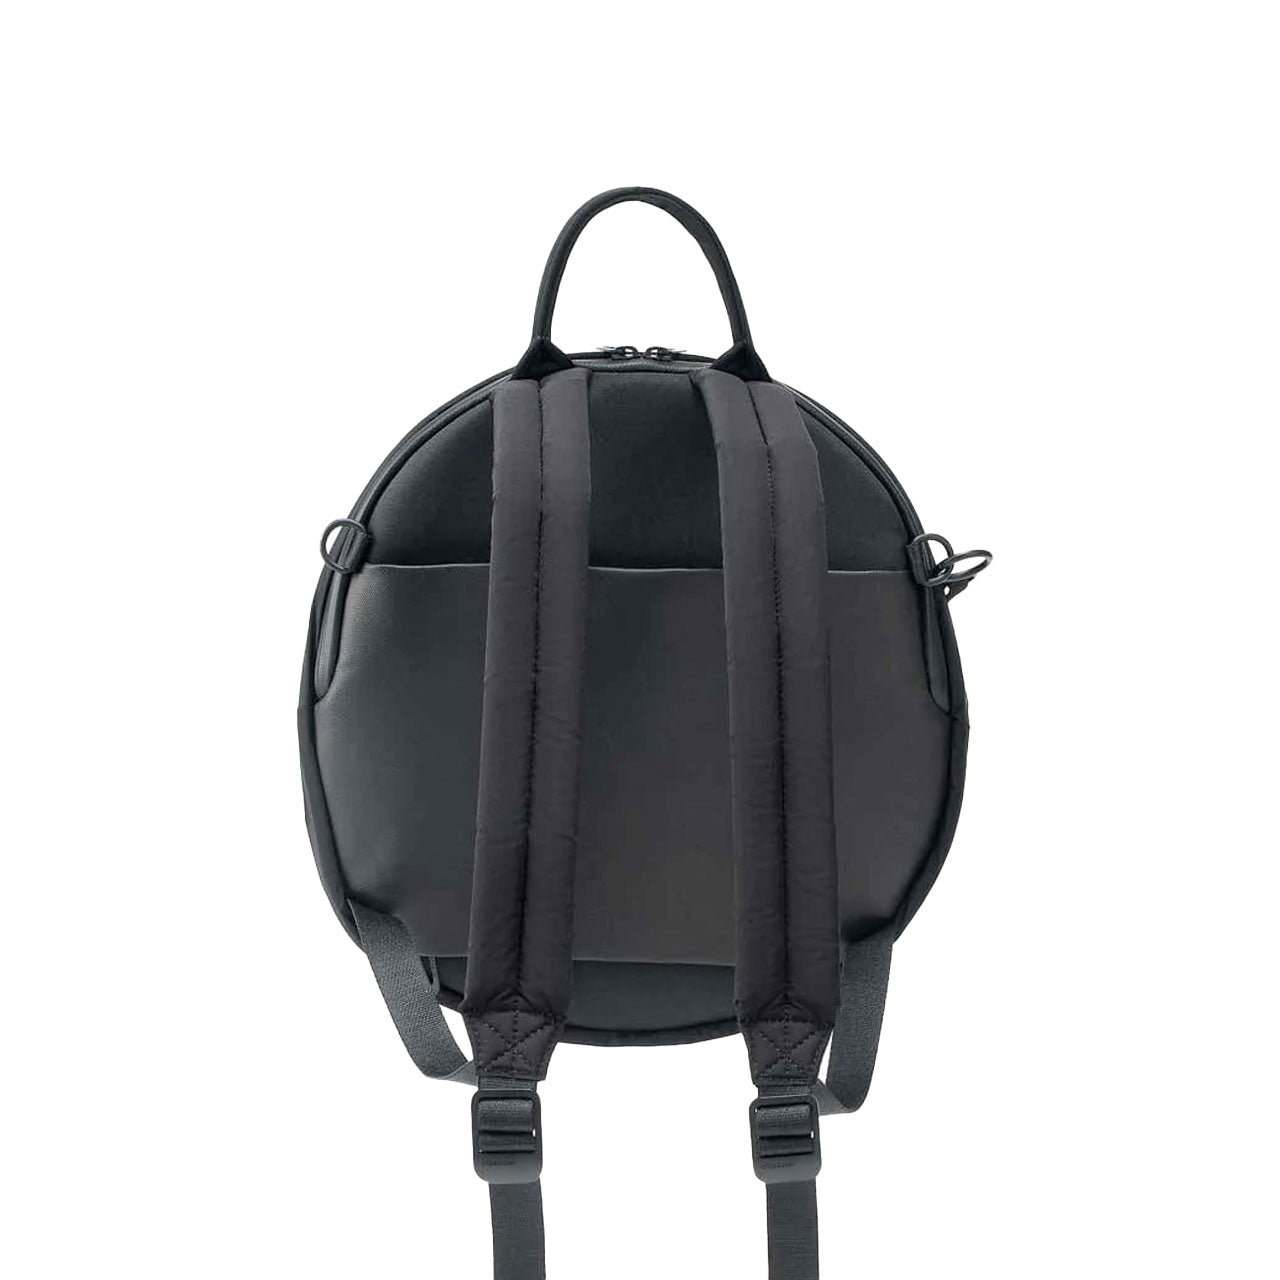 côte&ciel adria infinity backpack (black)